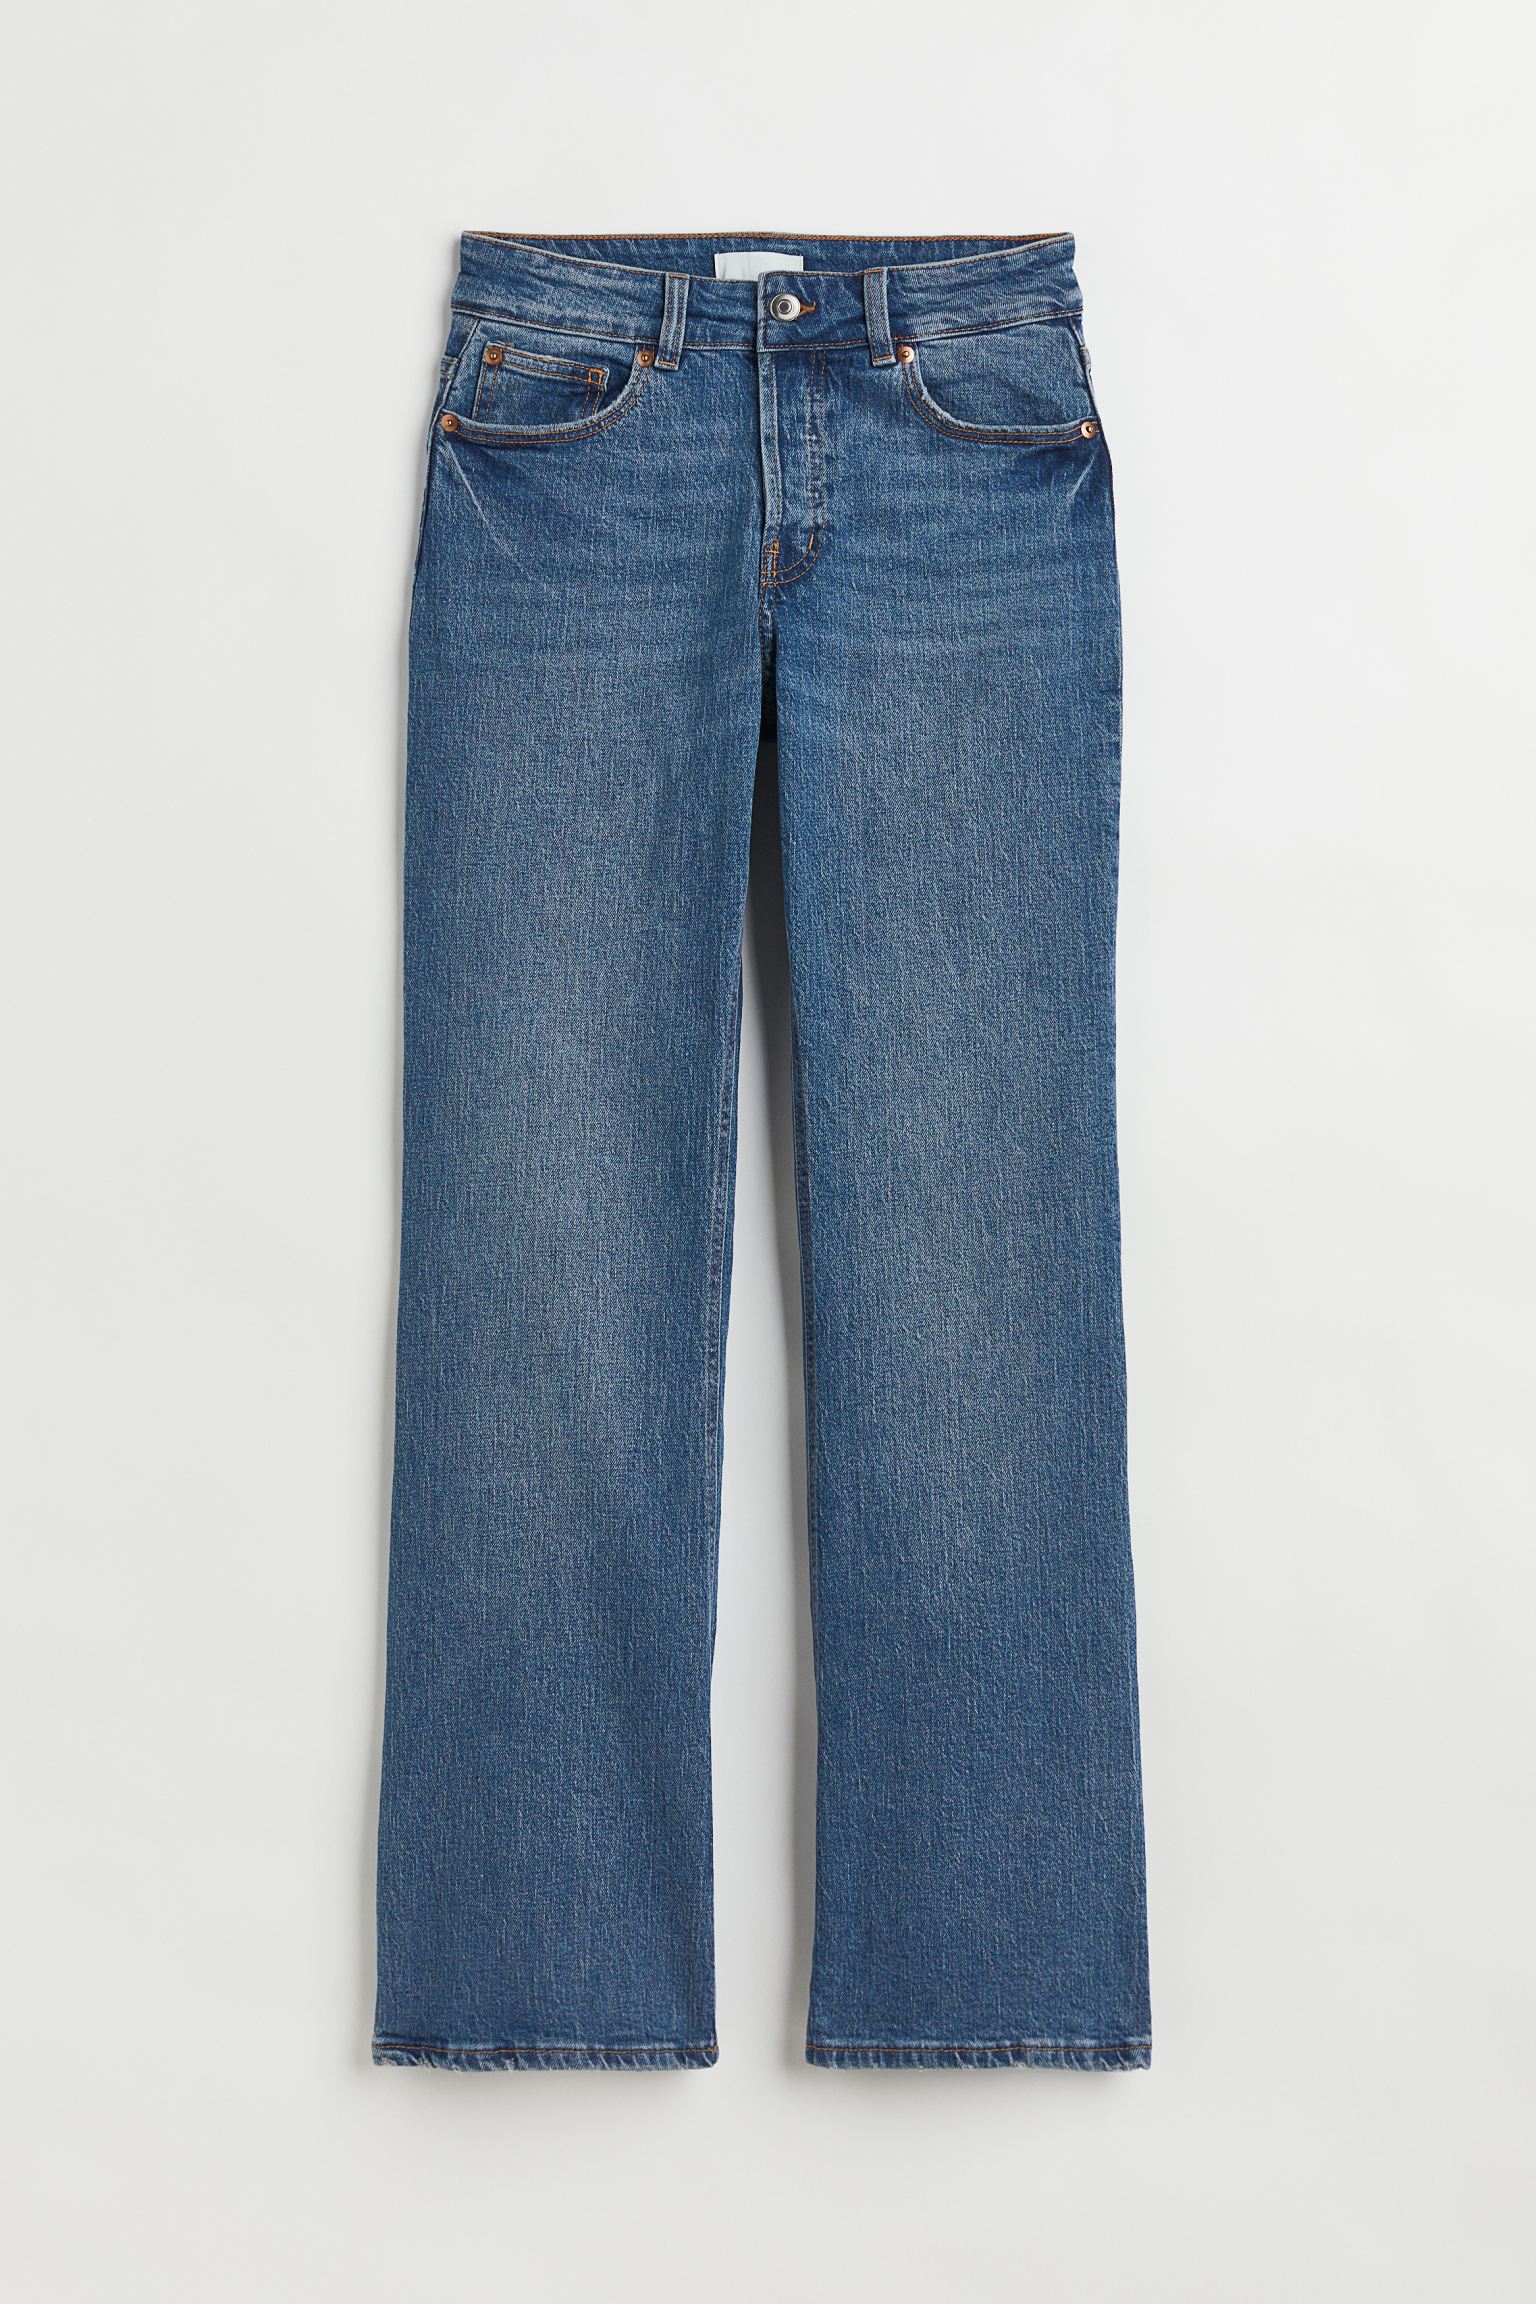 شلوار جینز 40112 سایز 24 تا 38 مارک H&M   *